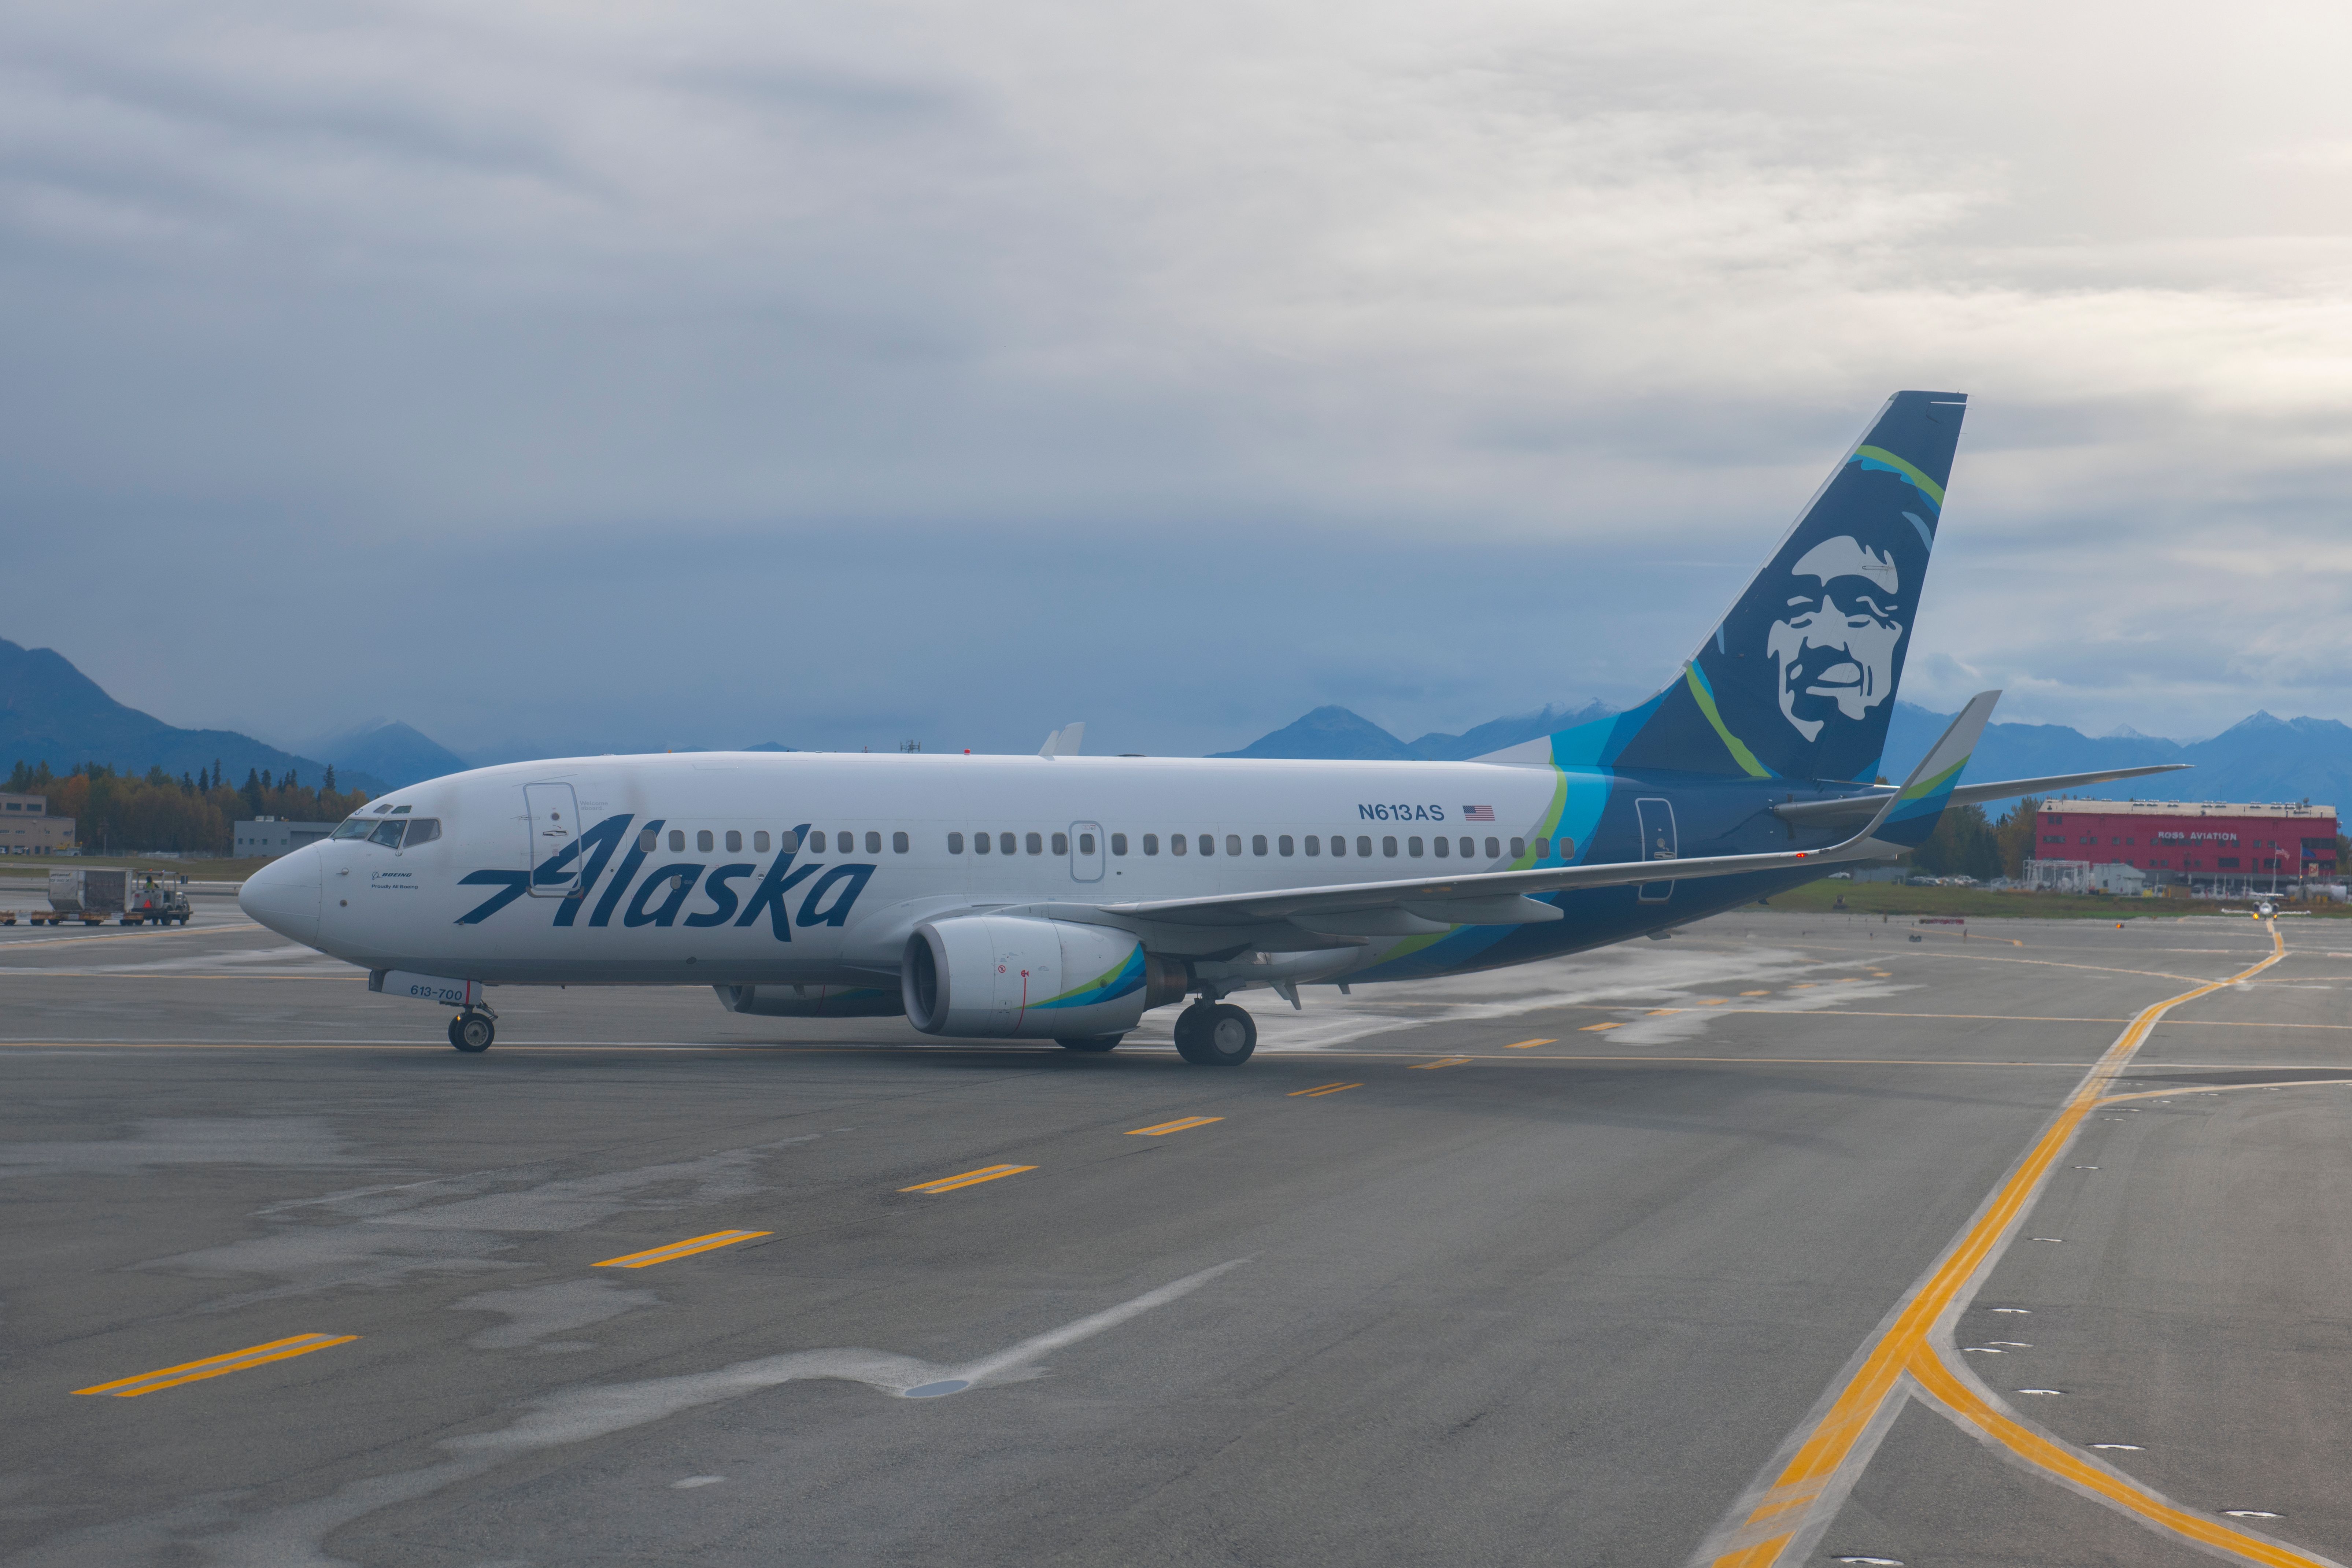 Alaska Airlines Boeing 737-790 (N613AS) at Ted Stevens Anchorage International Airport.